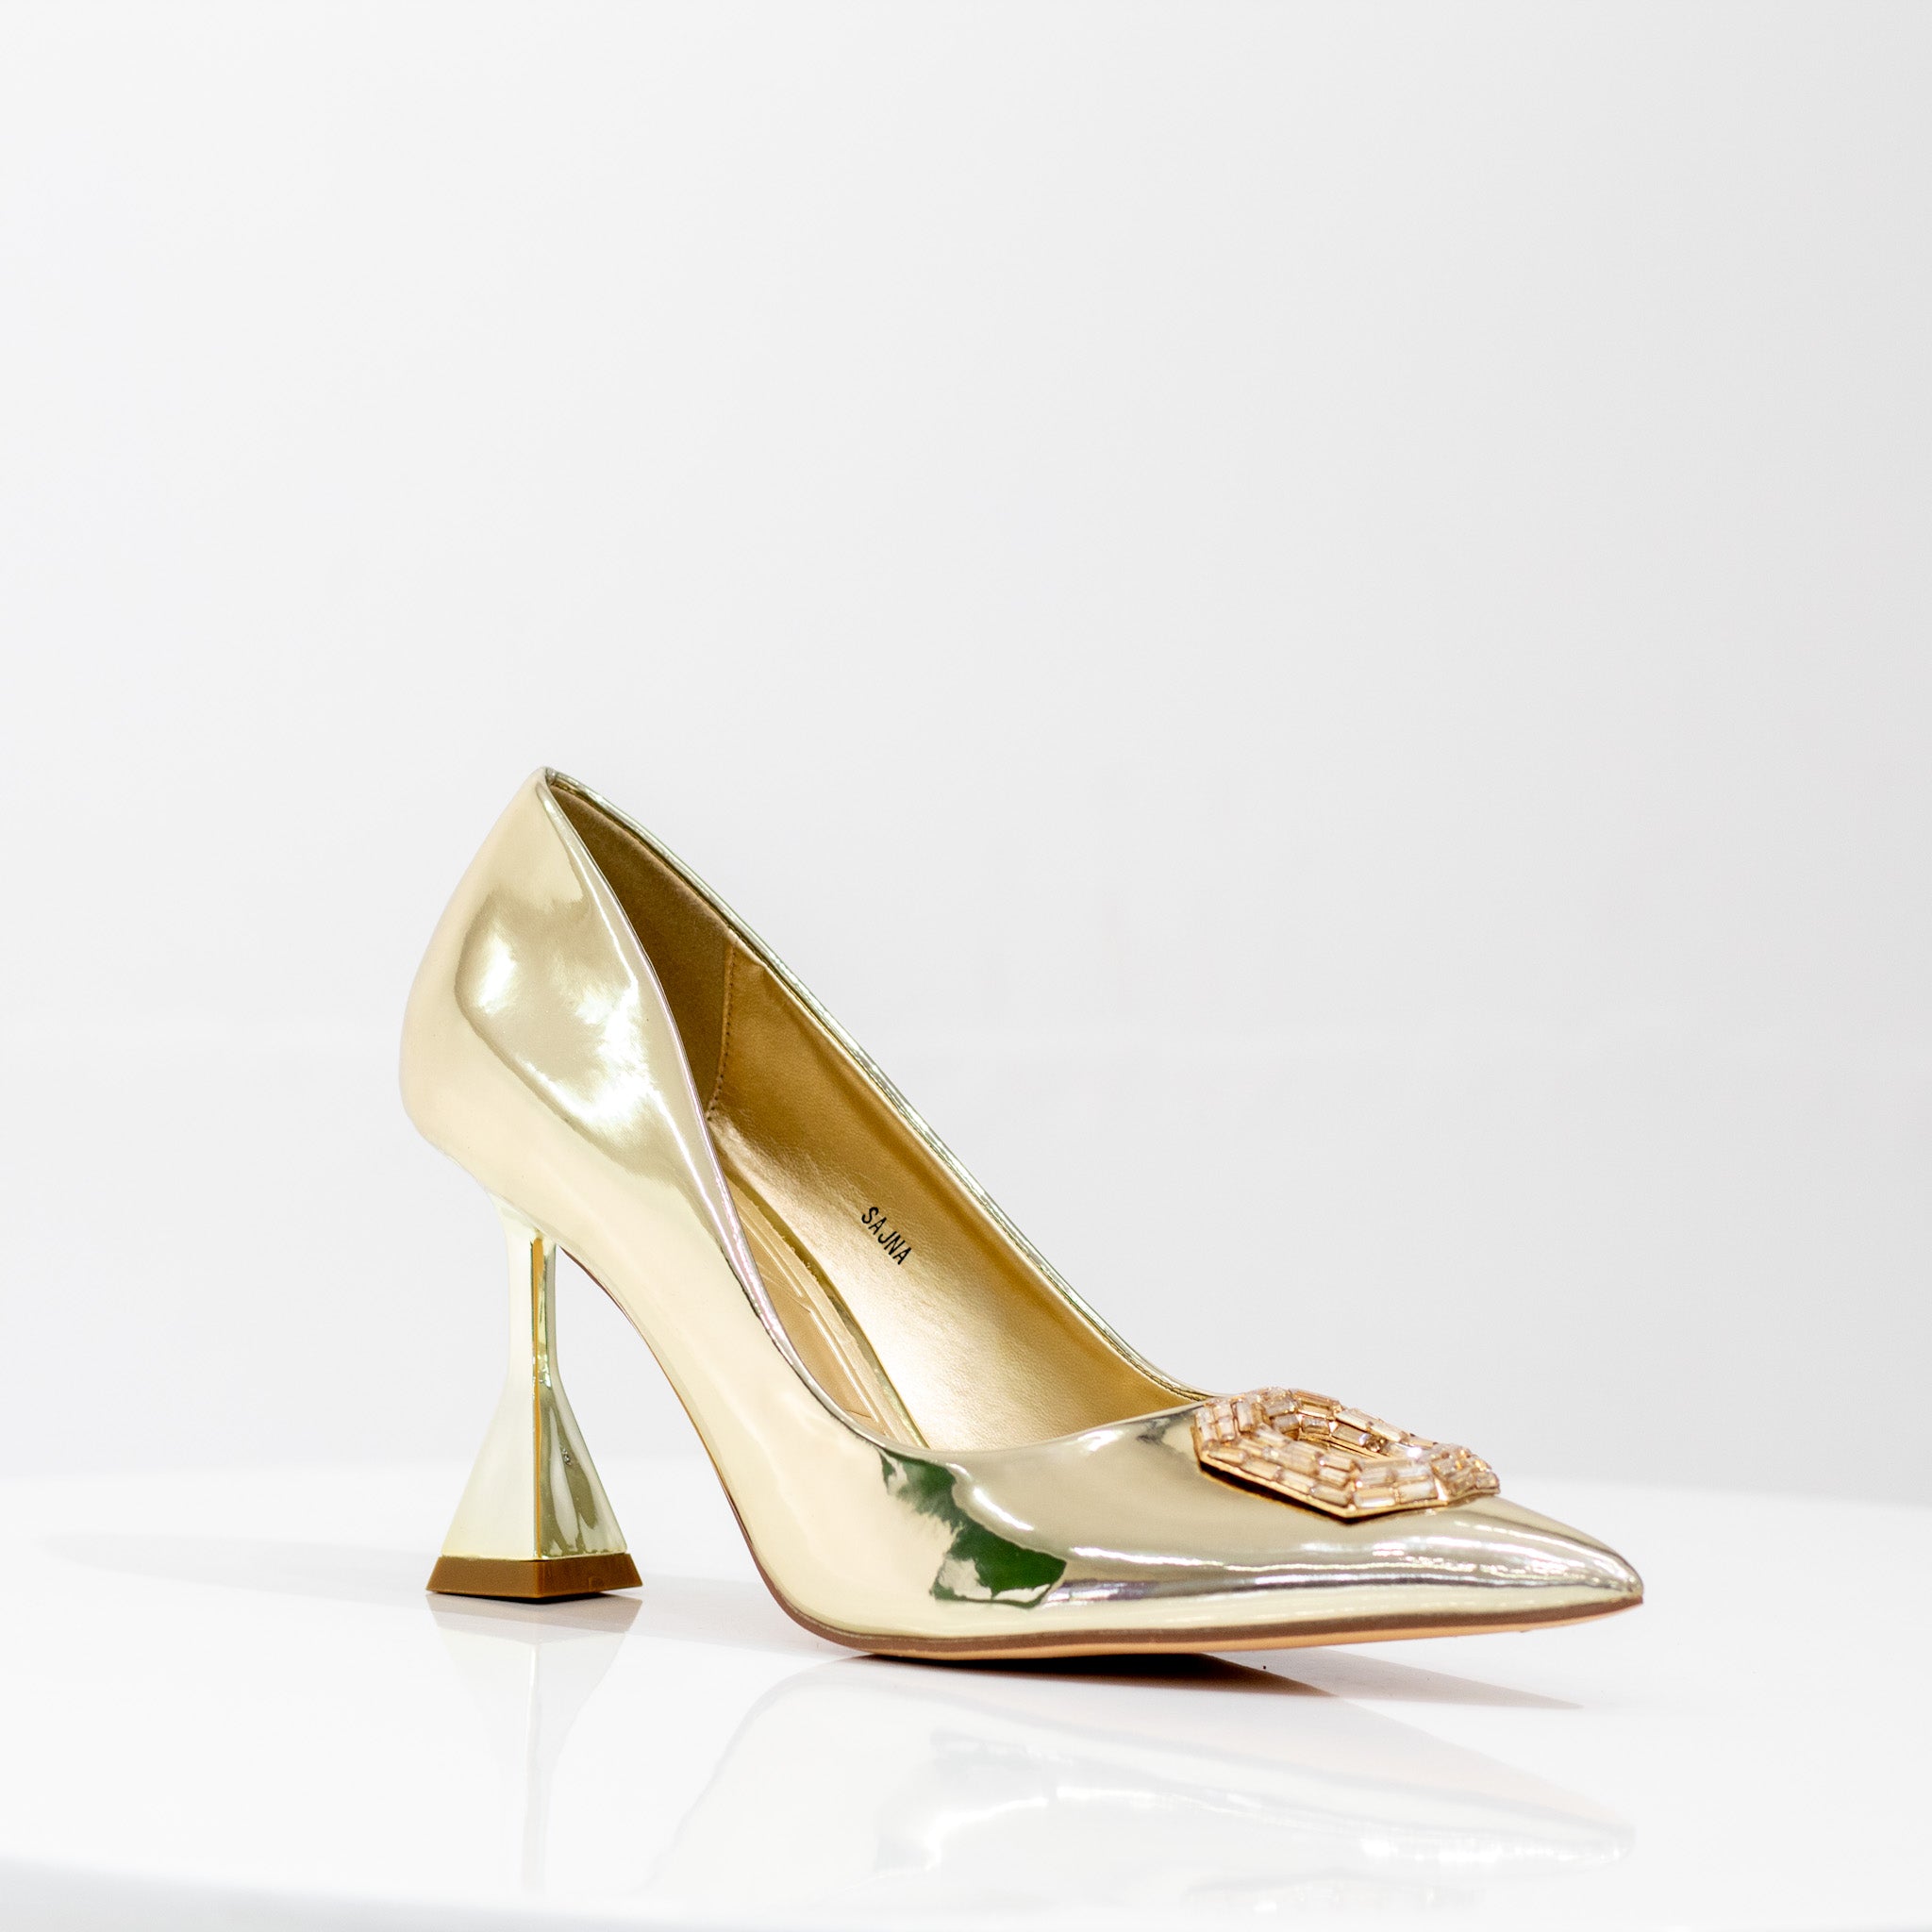 Sajna pat 9cm heel court with oct diamante trim